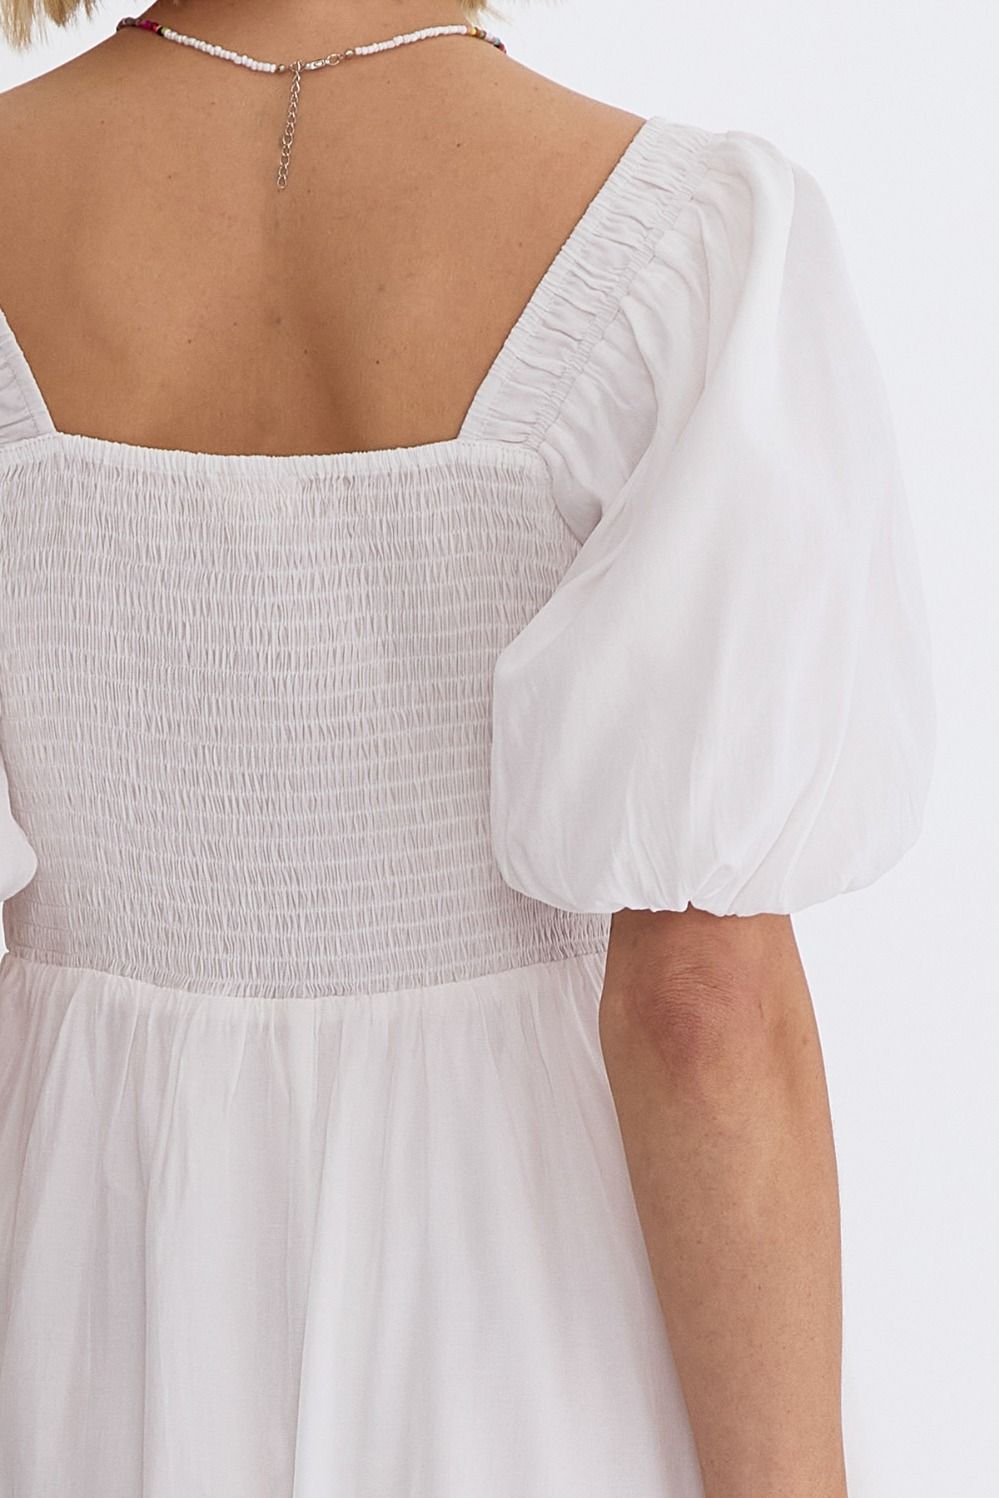 Entro | Off White Short Sleeve Dress | Sweetest Stitch Richmond 